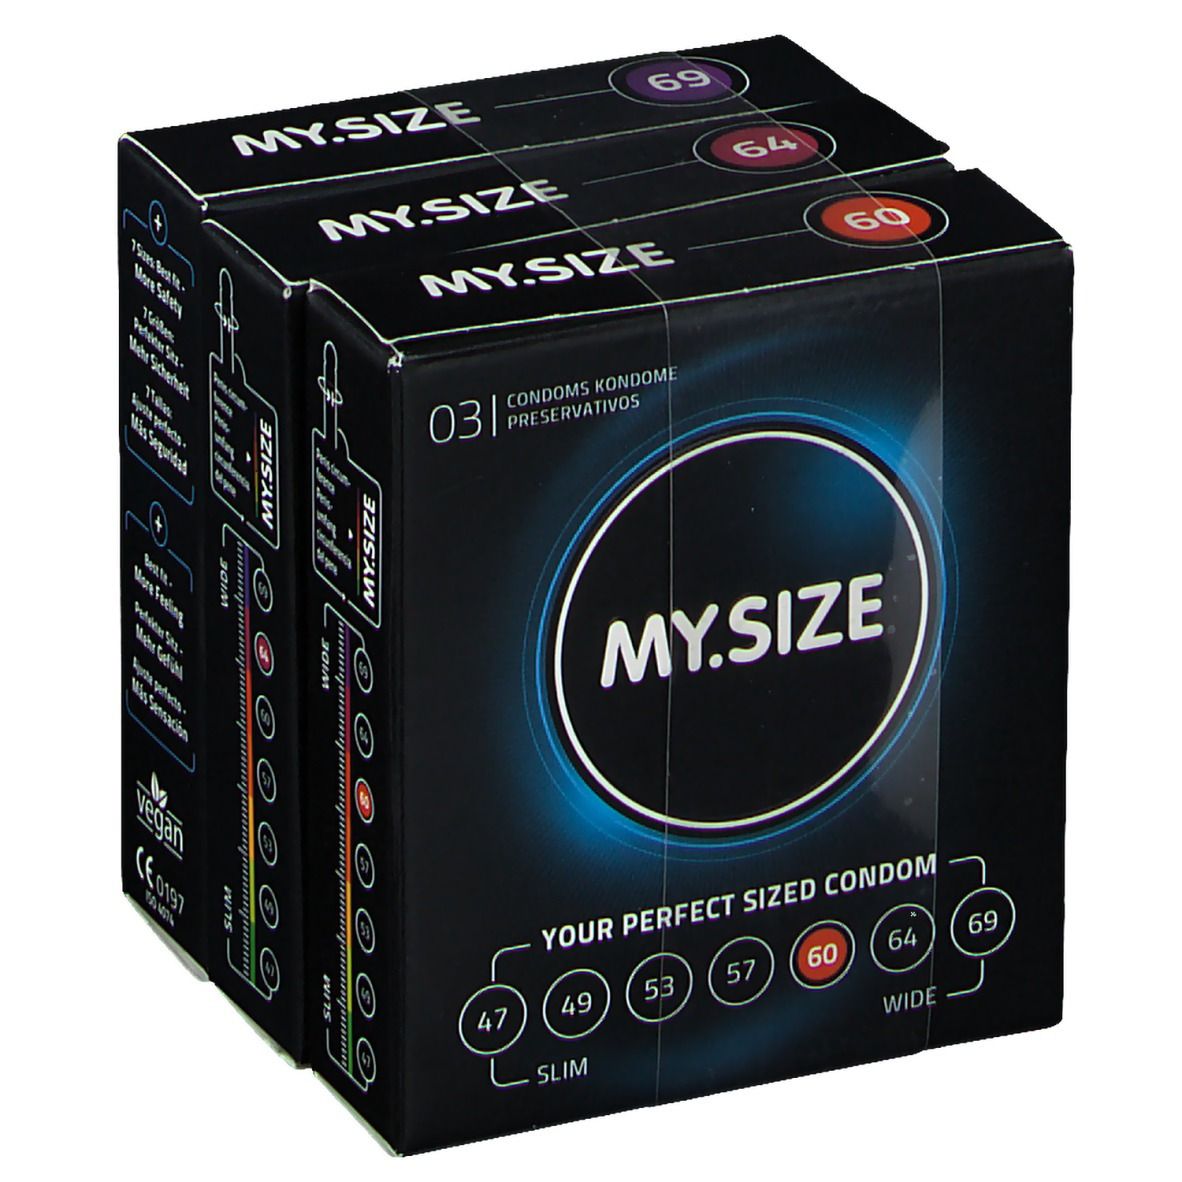 MY.SIZE 60 64 69 Kondome Testpack